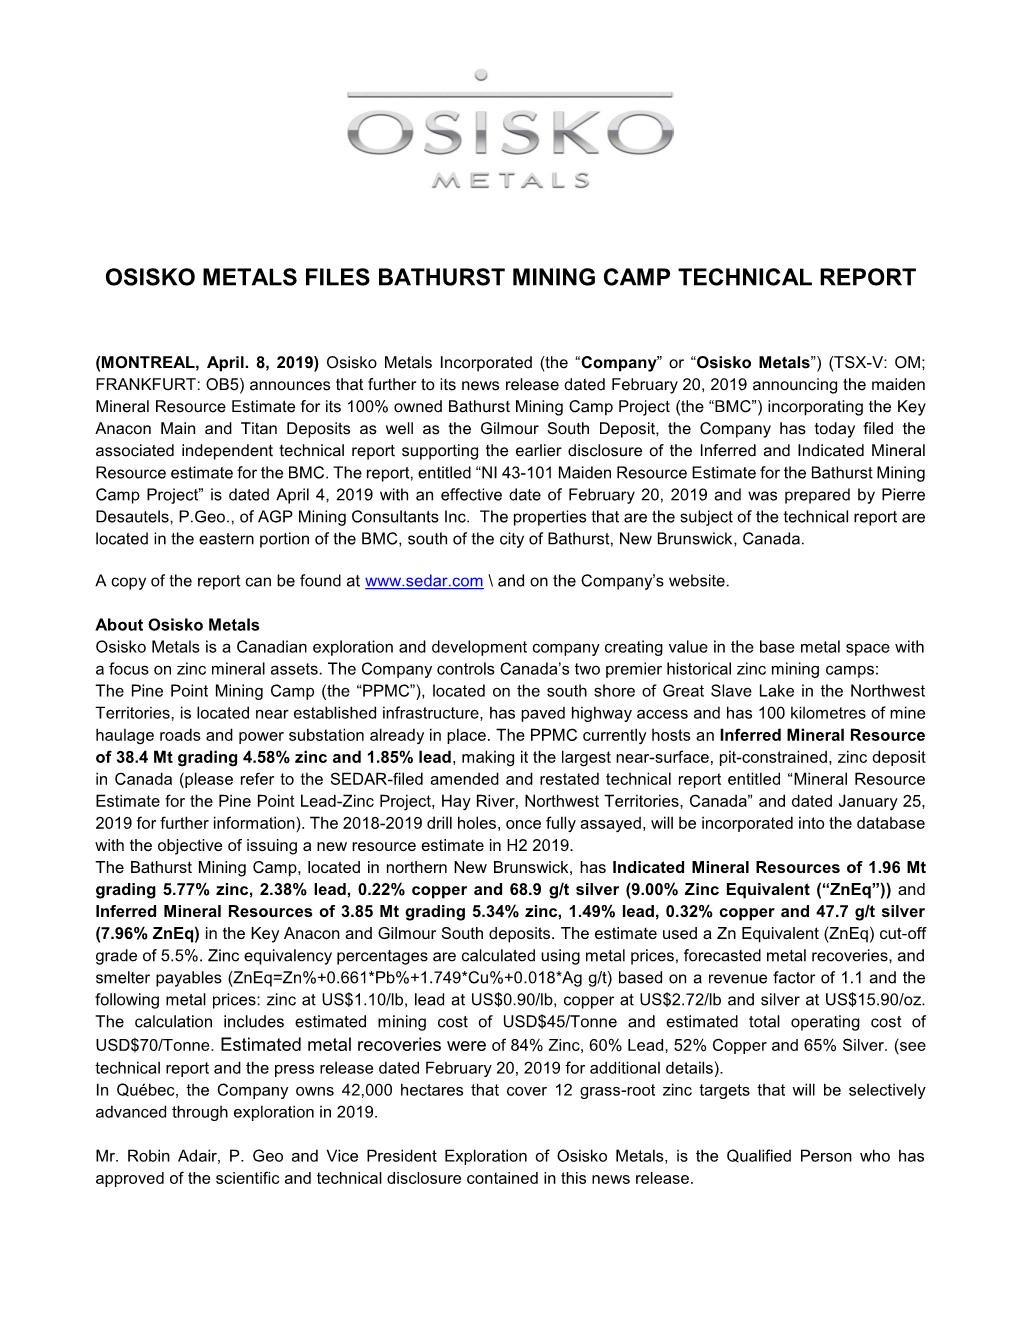 Osisko Metals Files Bathurst Mining Camp Technical Report